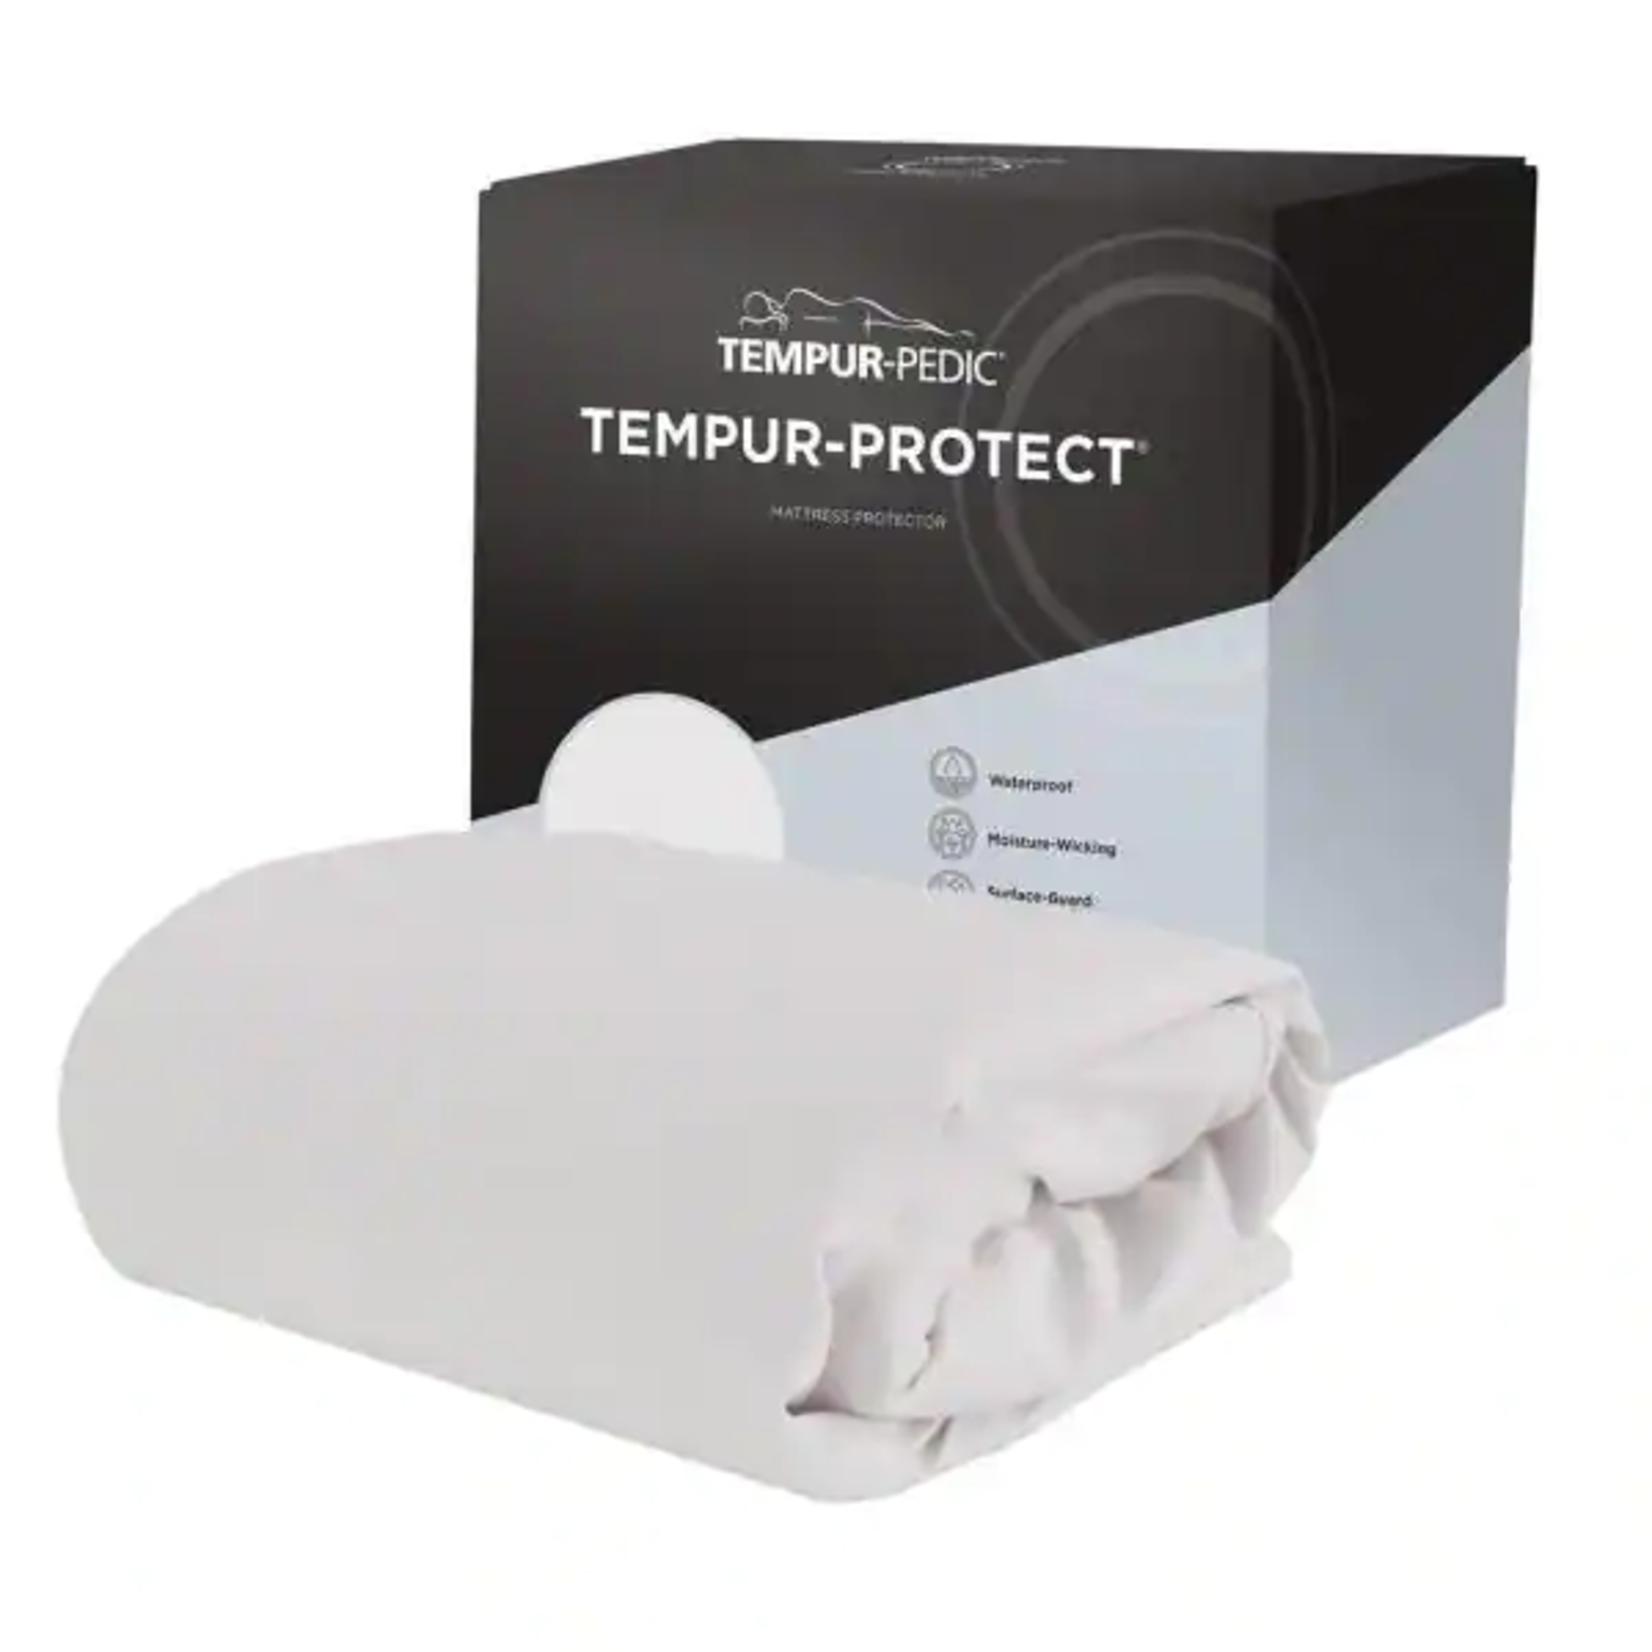 Tempur-Pedic TEMPUR-PROTECT Mattress Protector